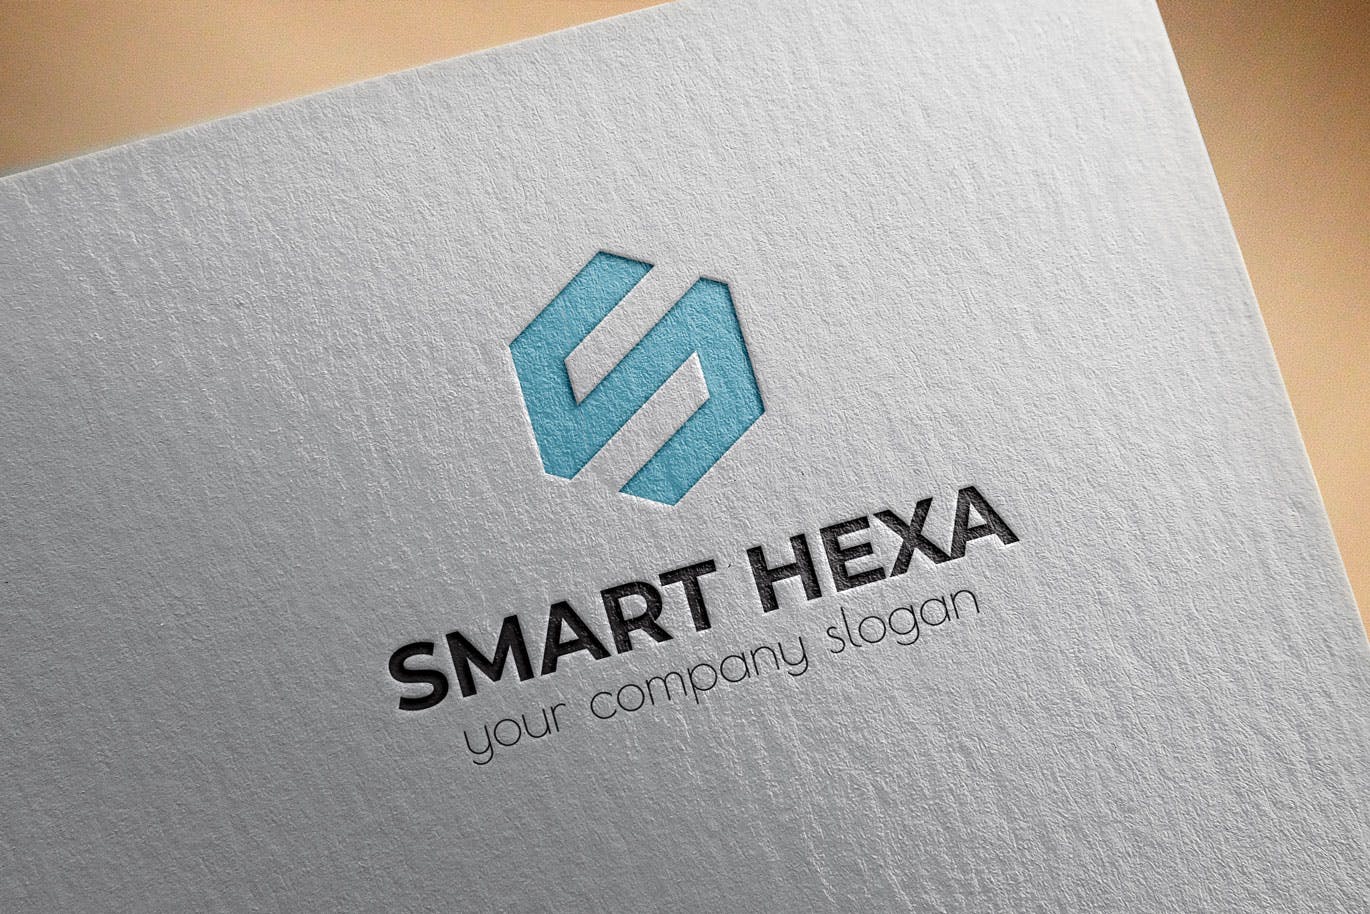 S字母图形Logo设计大洋岛精选模板 Smart Hexa Awesome Logo Template插图2